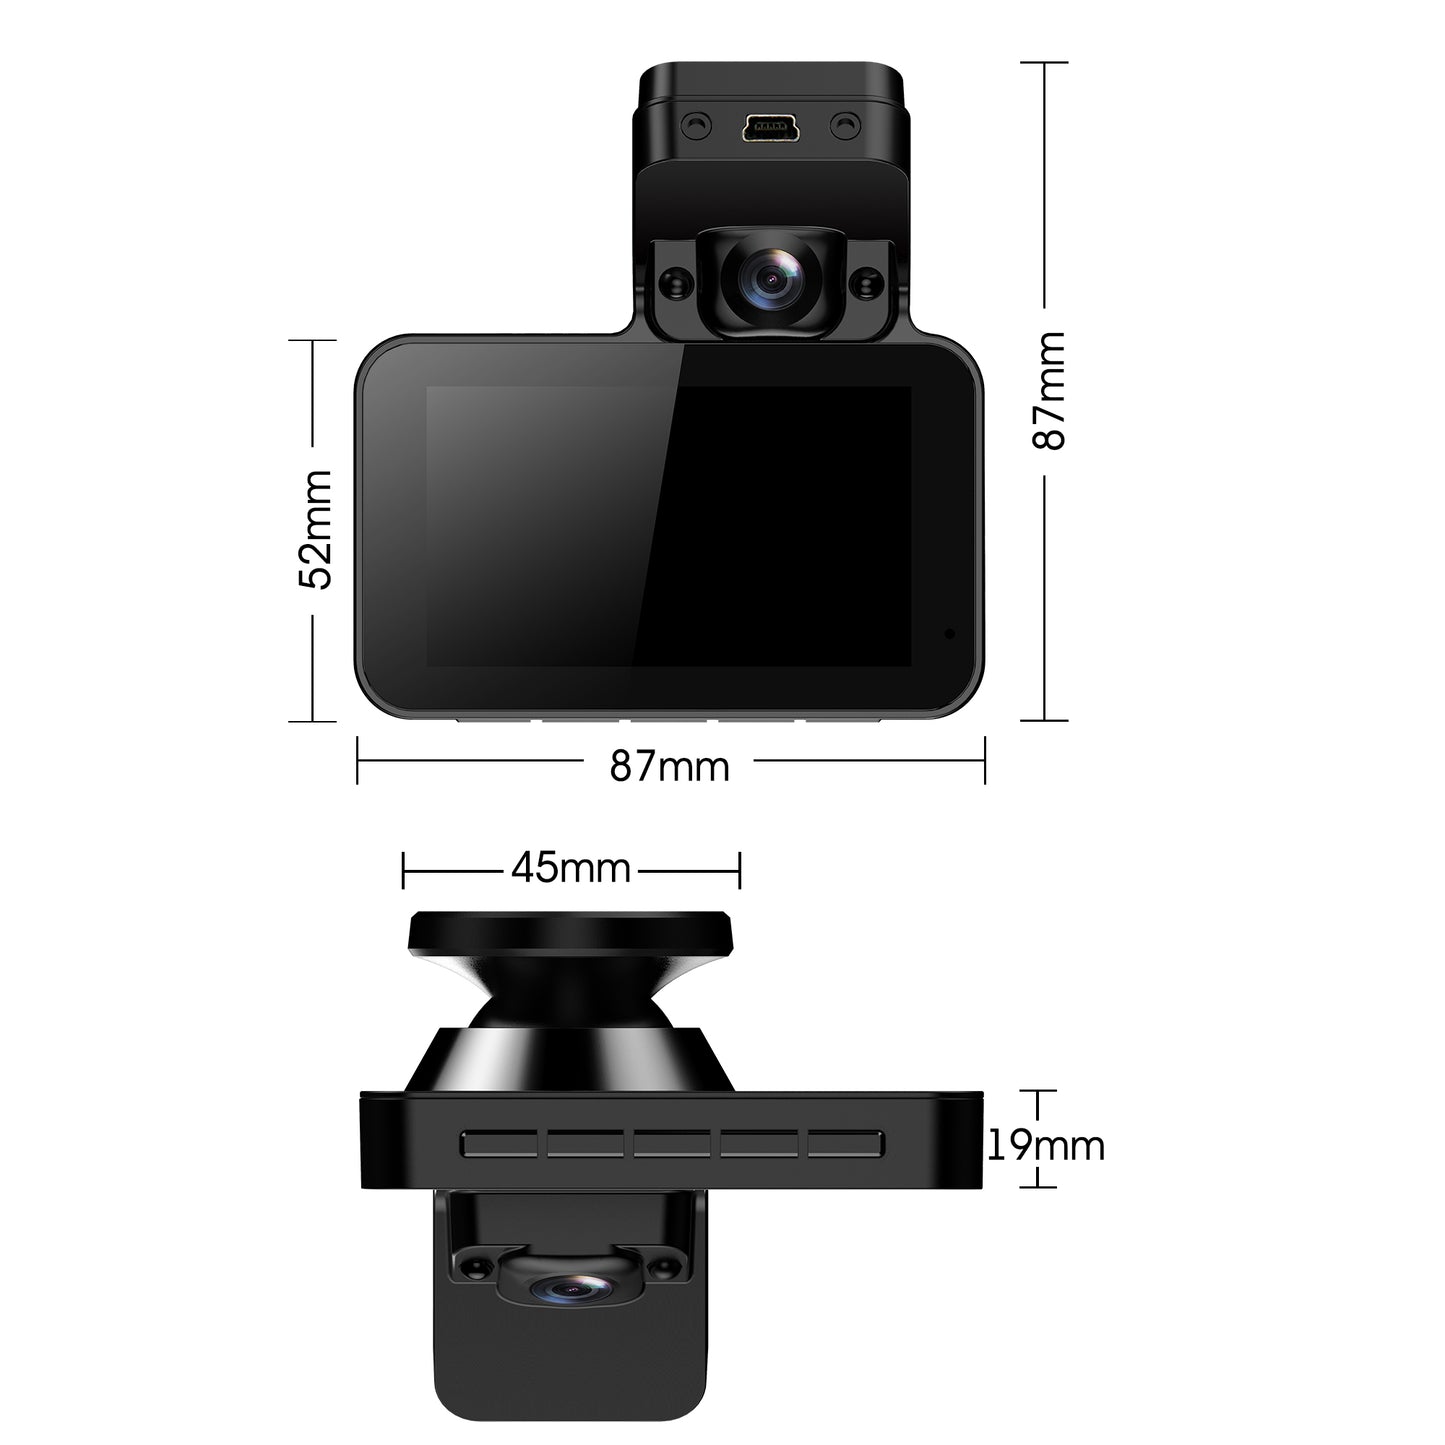 iMirror M3 - 4K Dash Camera for Cars